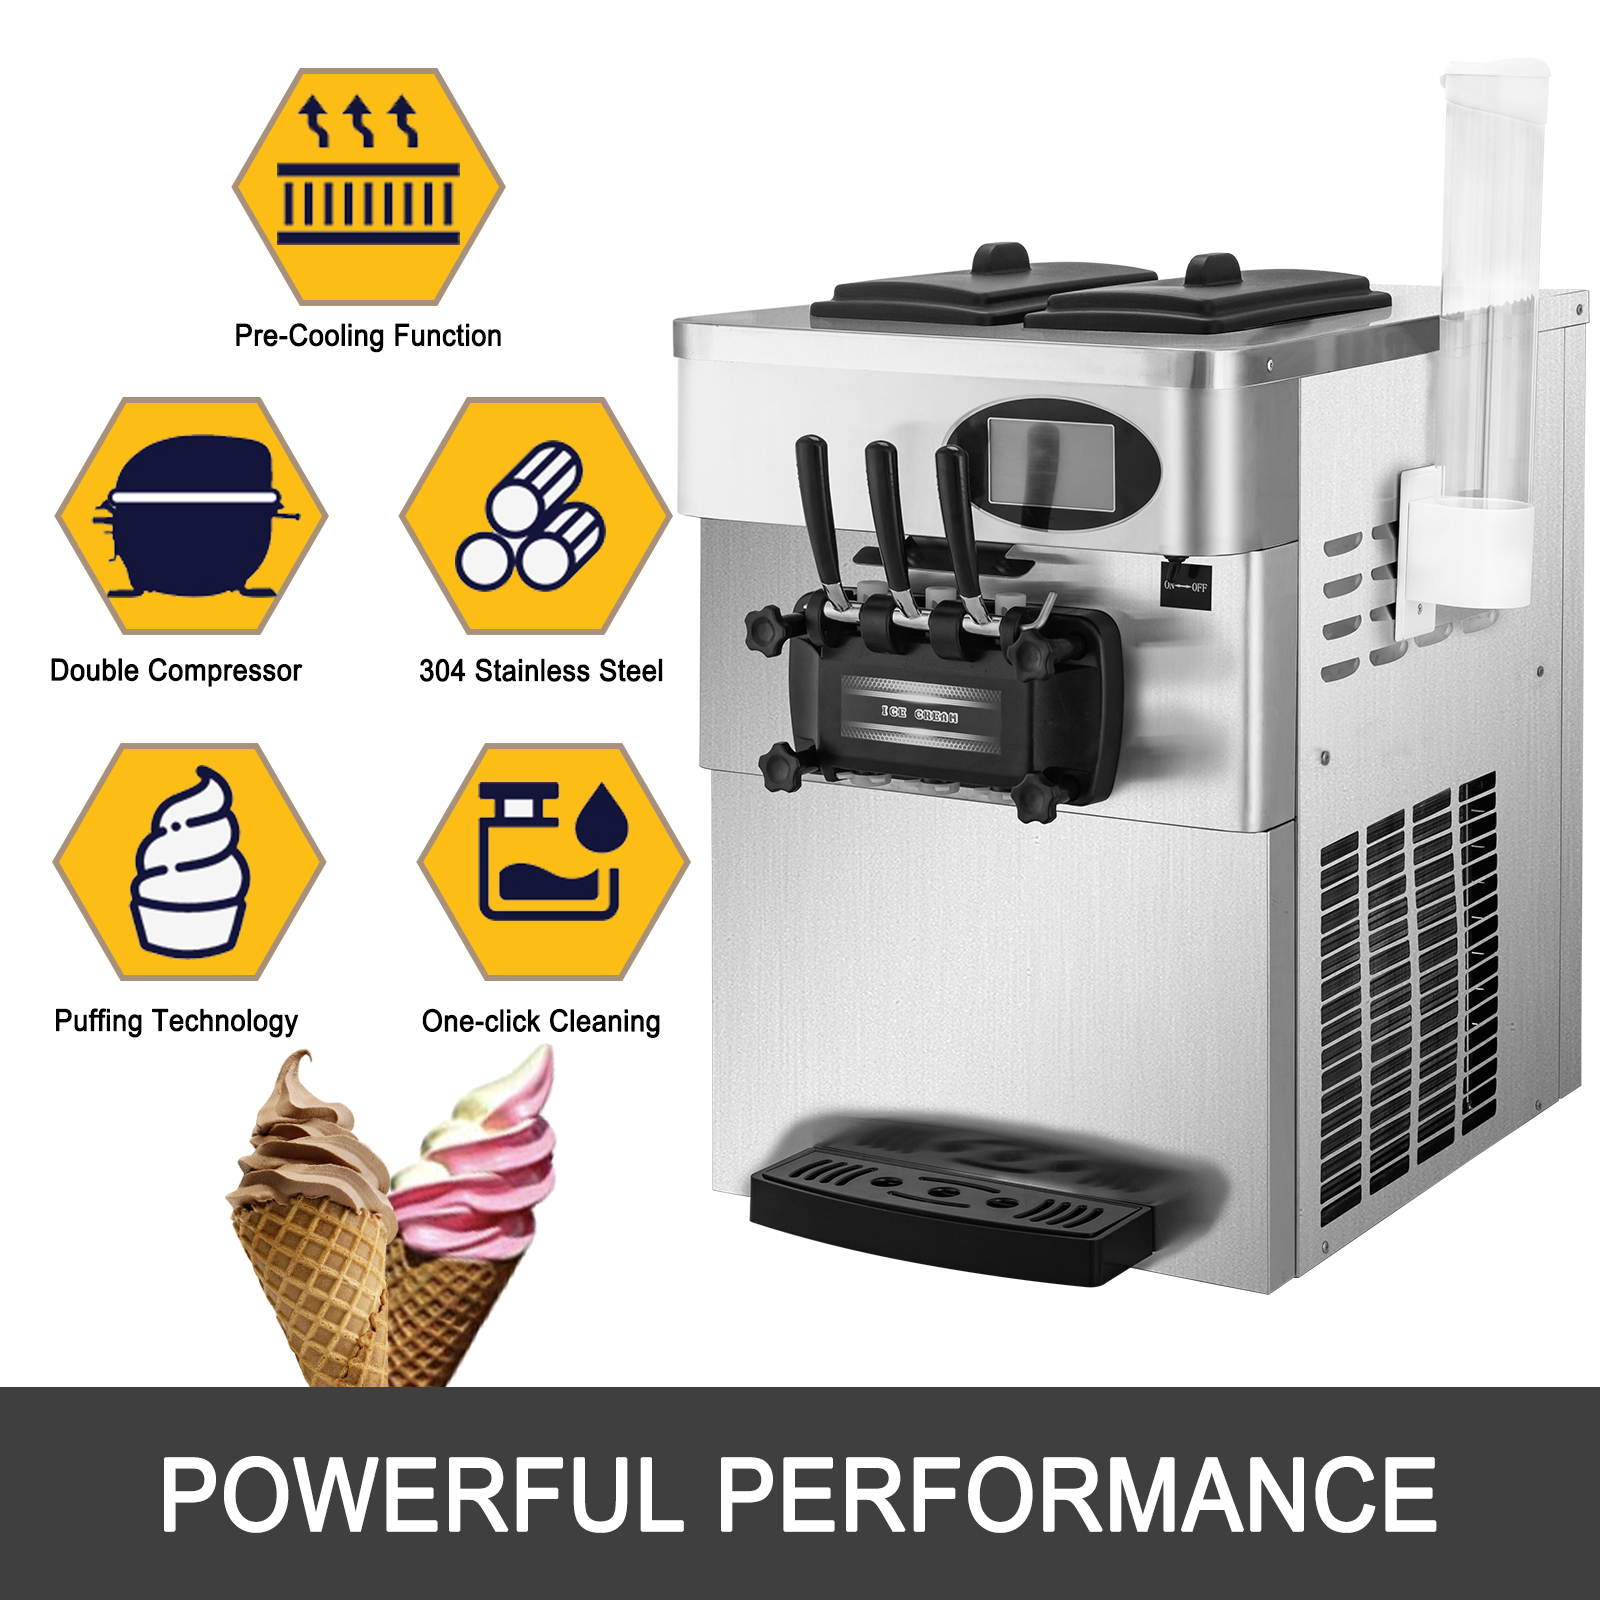 VEVOR 18-28l/h Commercial Soft Serve Ice Cream Maker 3 Flavors Ice Cream Machine